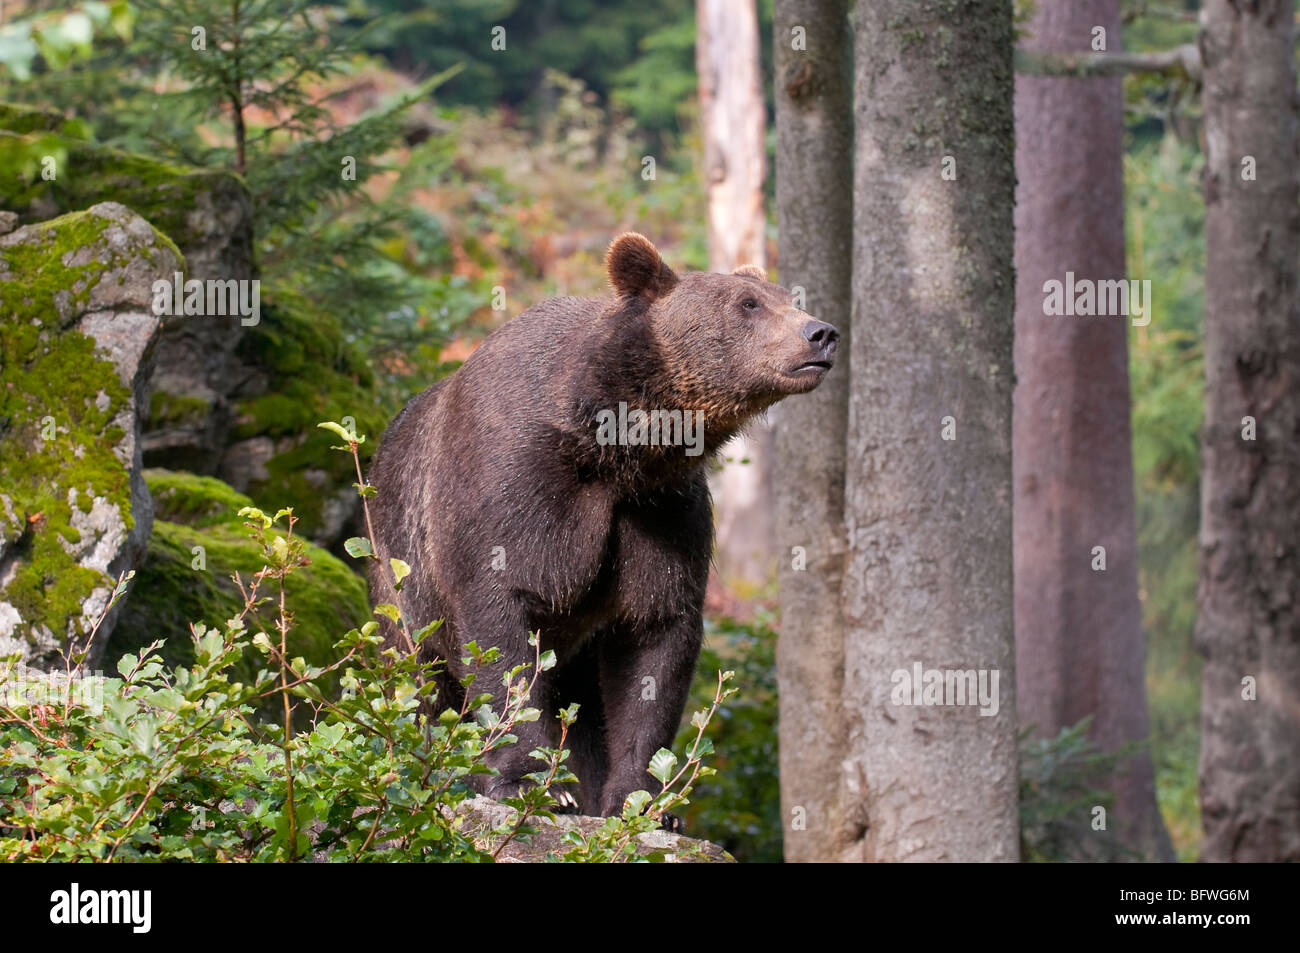 Braunbär (Ursus arctos) - L'ours brun Européen Banque D'Images